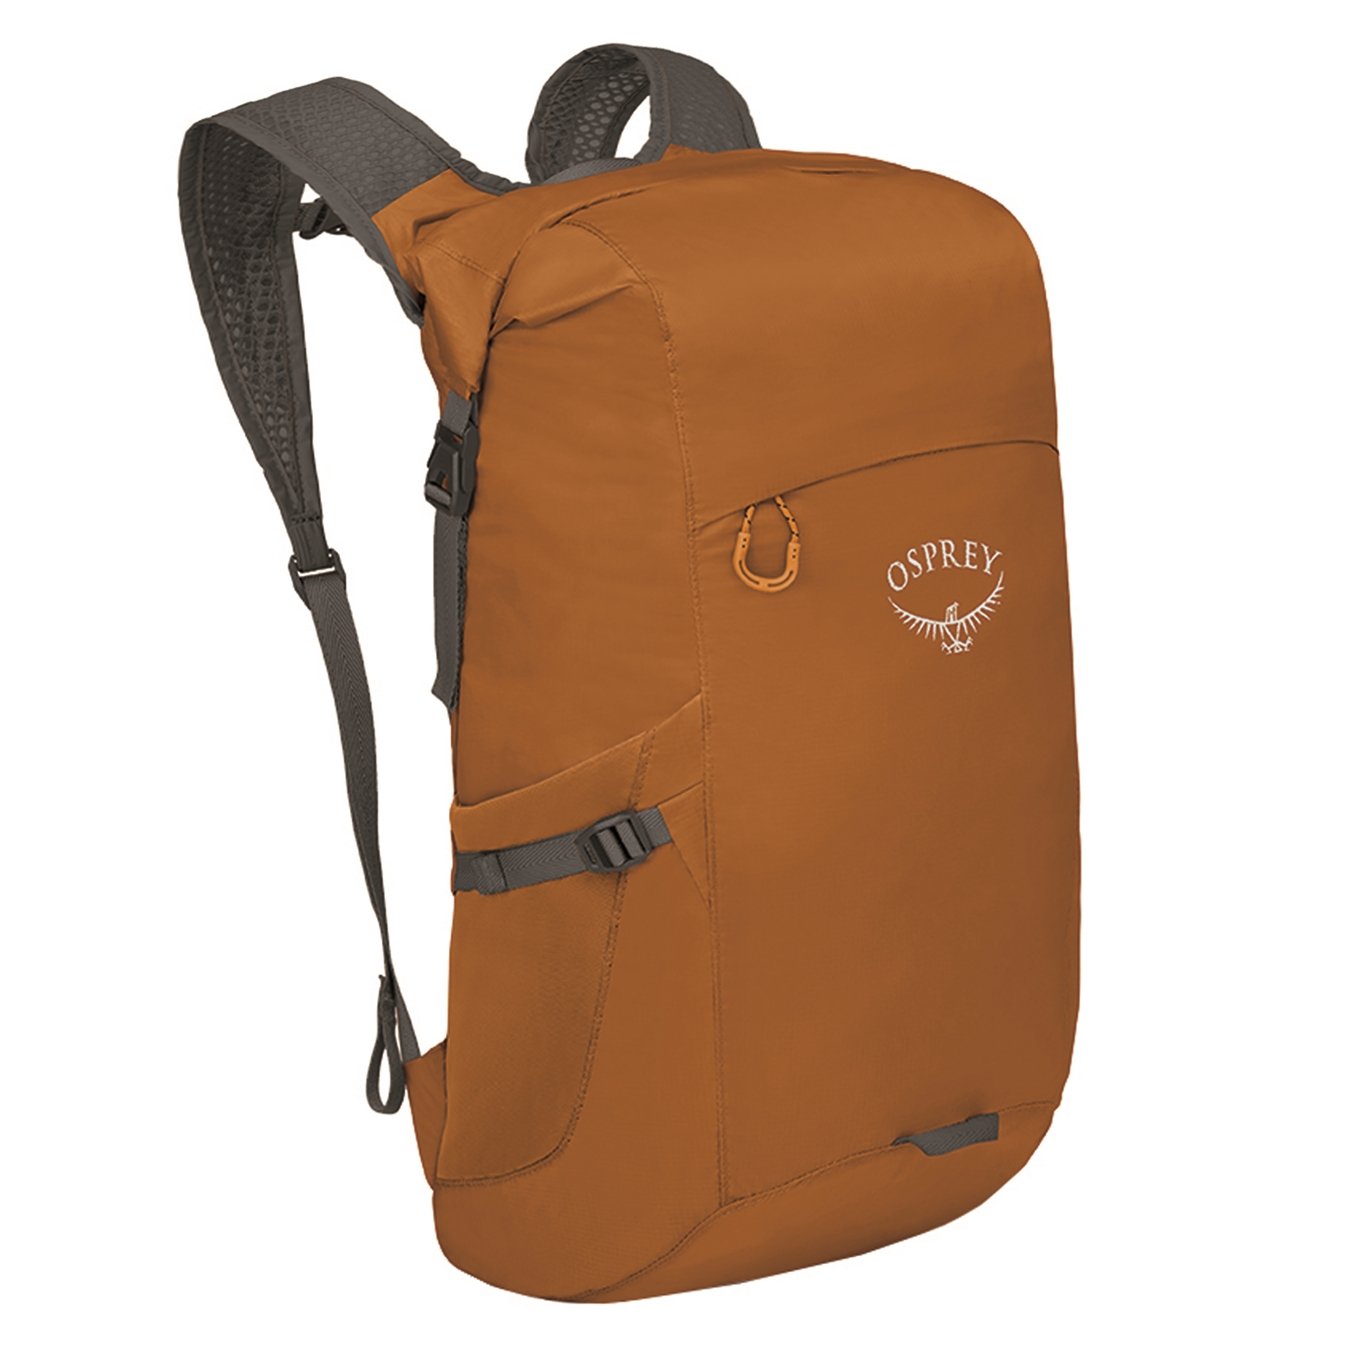 Osprey Ultralight Dry Stuff Pack toffee orange backpack